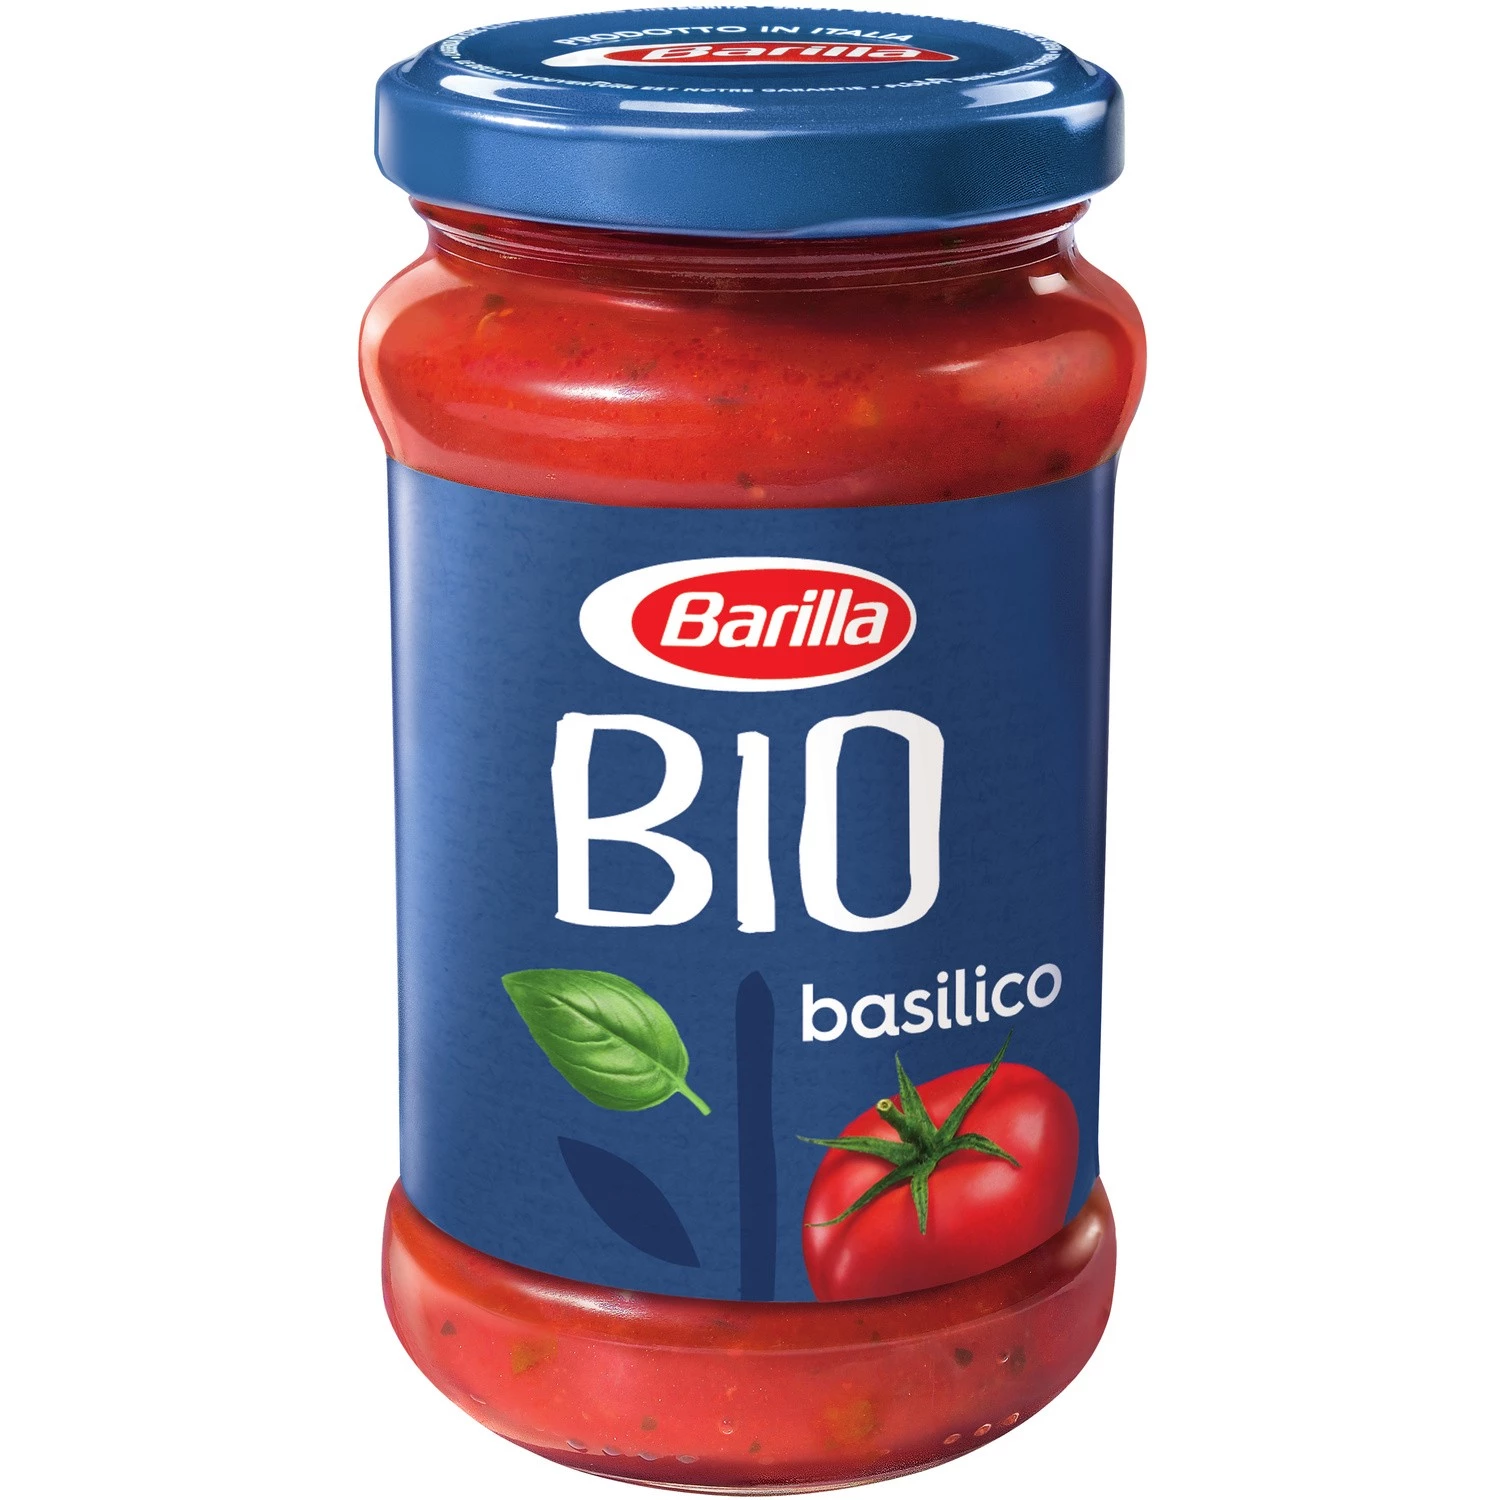 有机罗勒番茄酱 200g - BARILLA